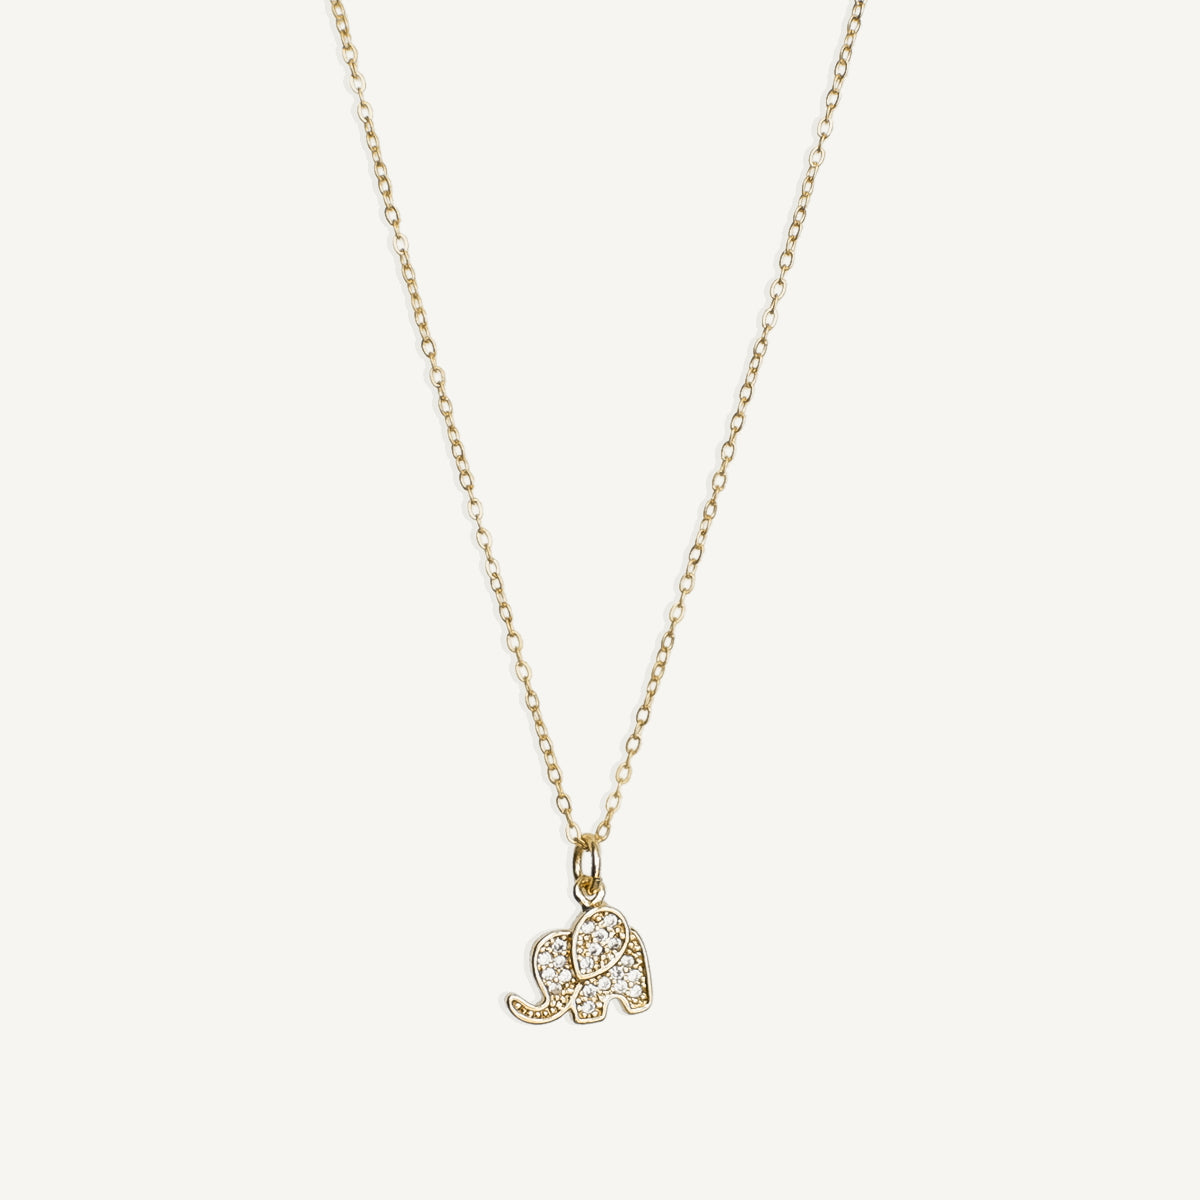 The Pave Elephant Necklace